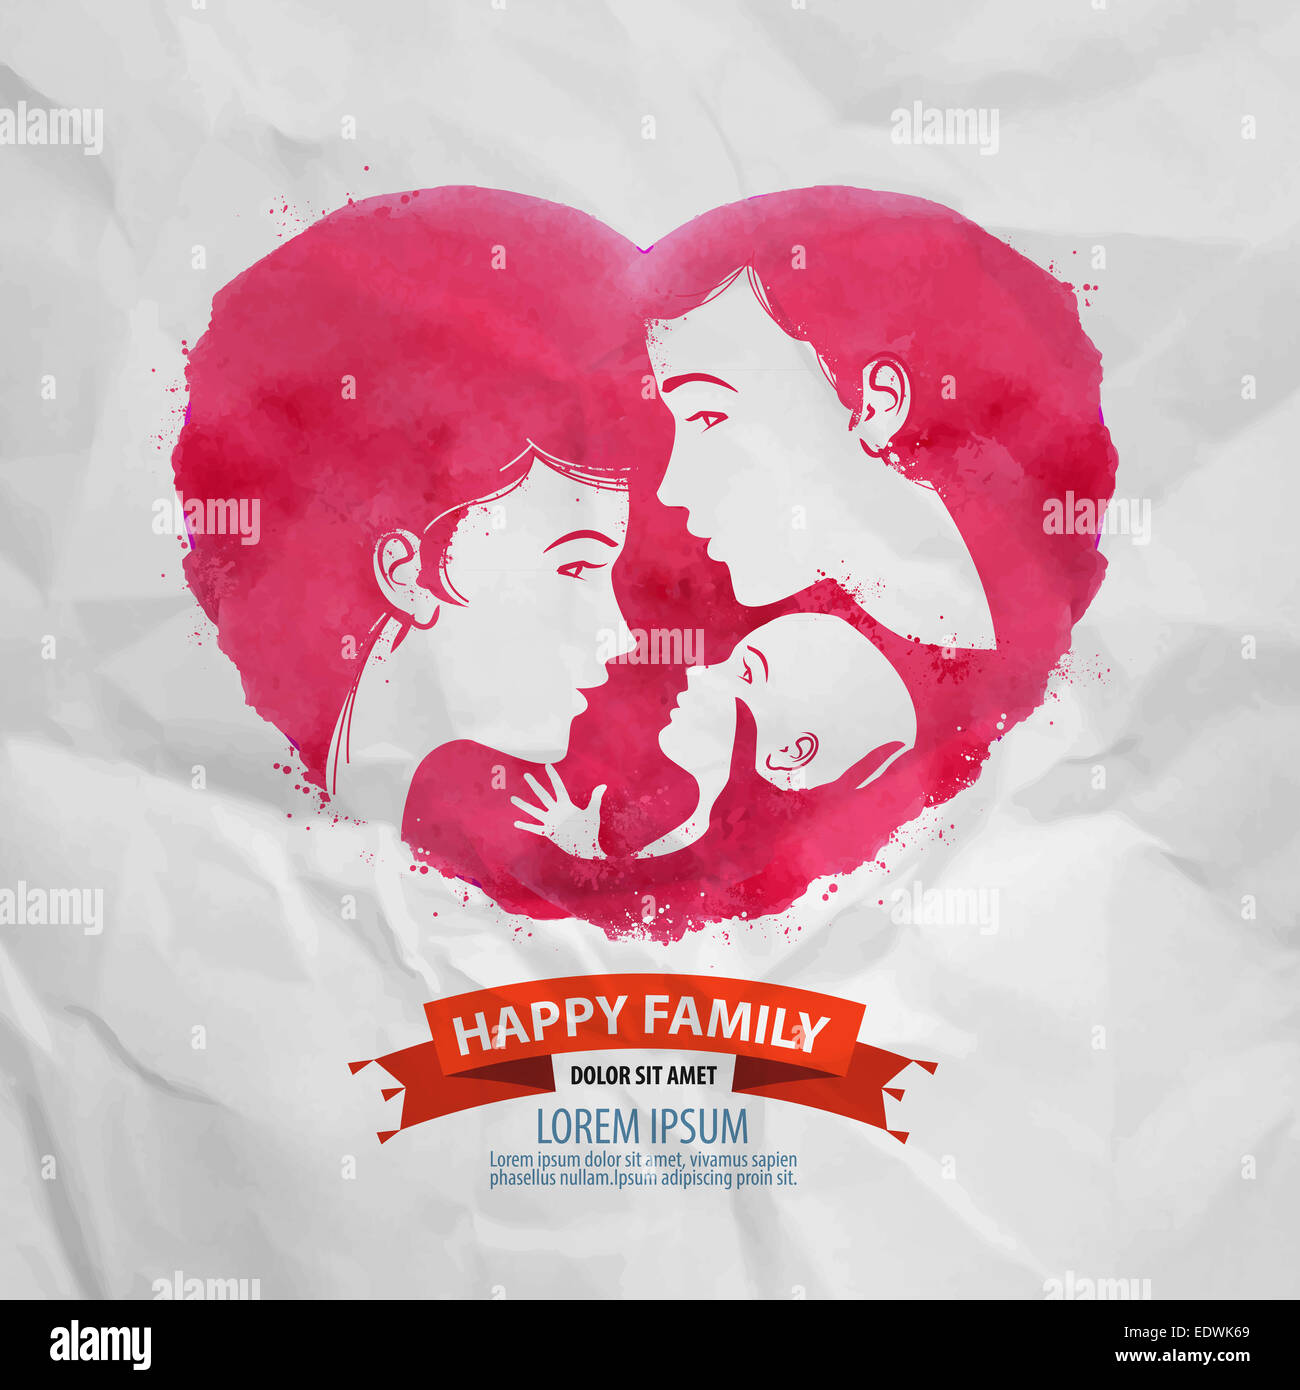 happy family vector logo design template. motherhood or child icon. Stock Photo